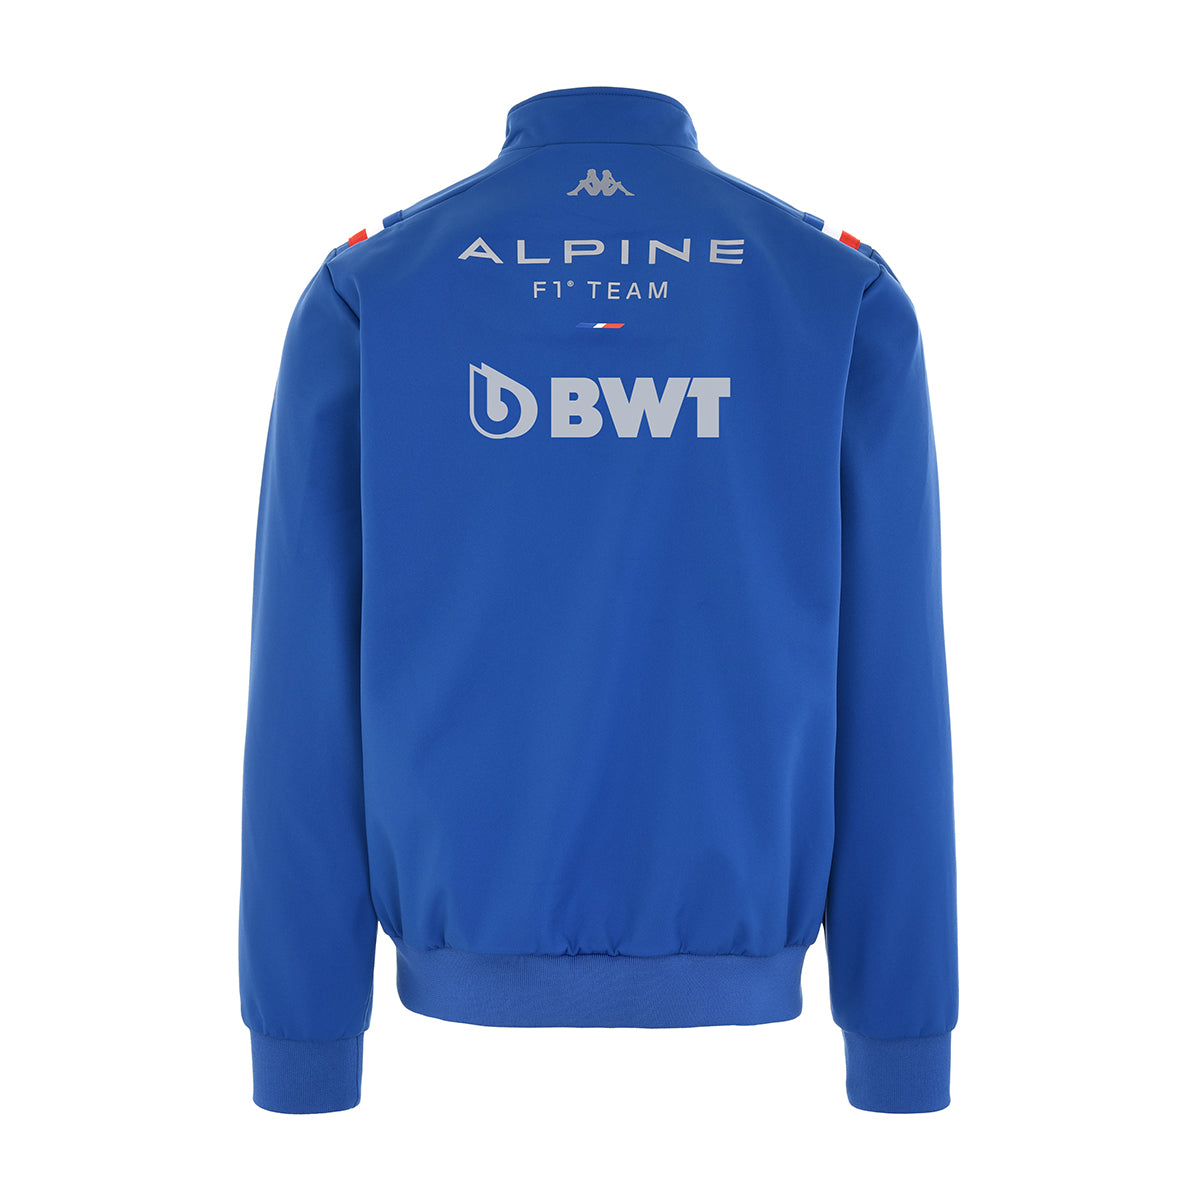 Chaqueta Ambach BWT Alpine F1 Team Azul Hombre - imagen 3